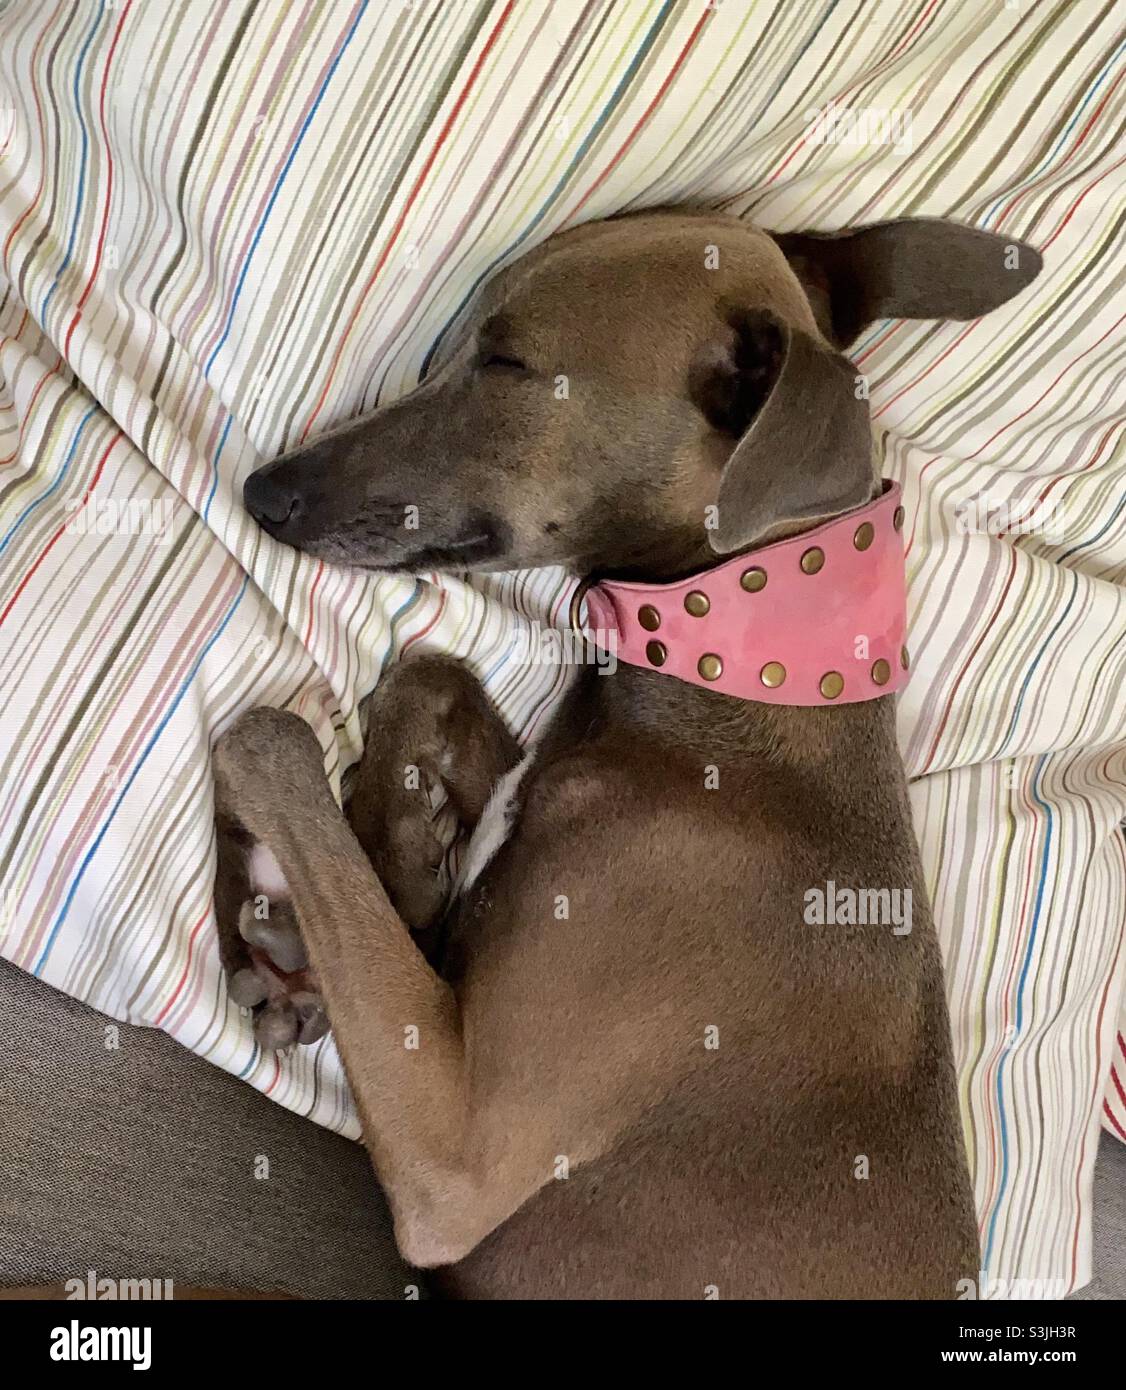 Cute iggy sleeping with her pink collar Stock Photo